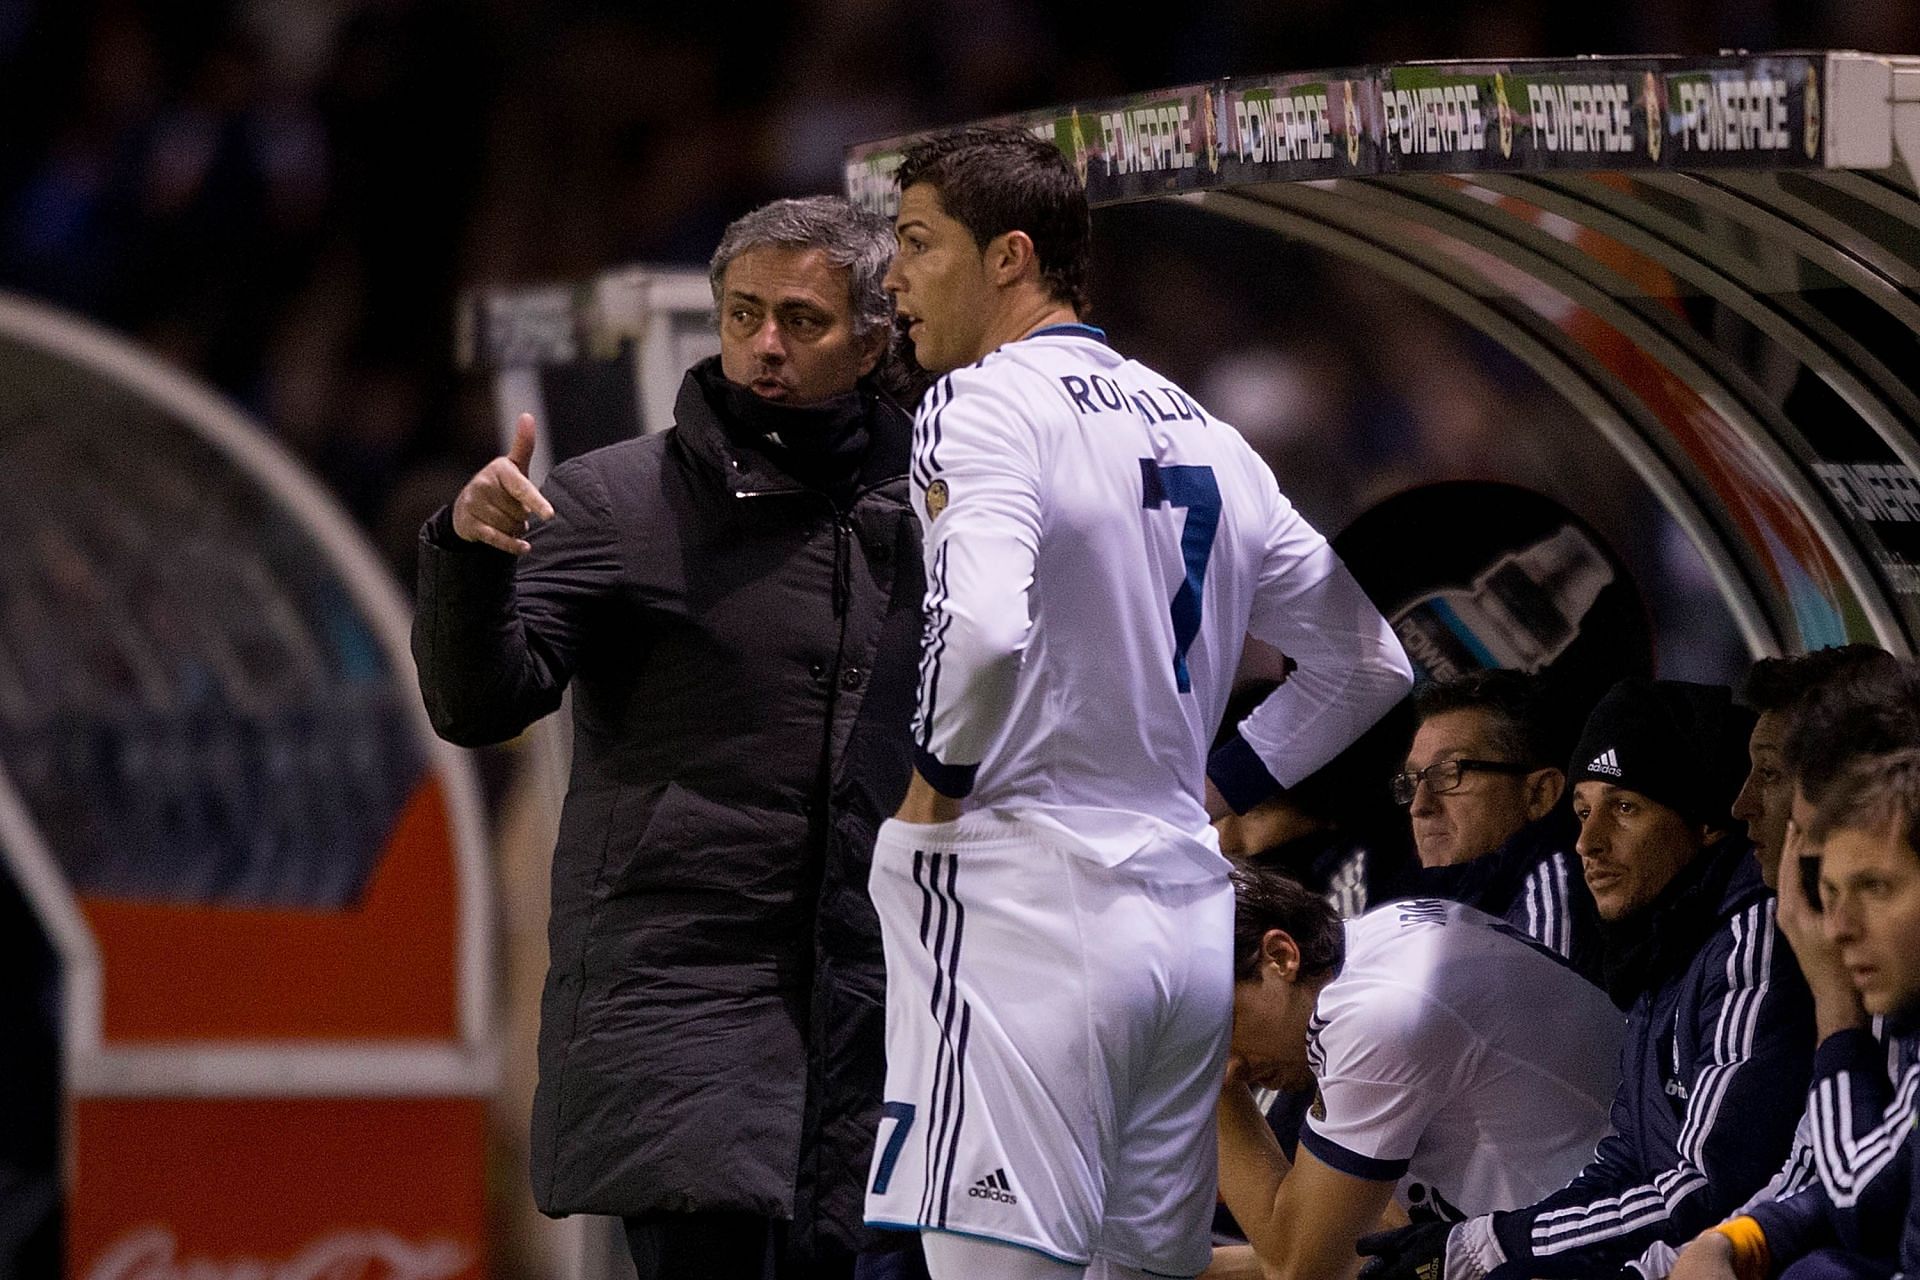 Jose Mourinho (left) managed Ronaldo (#7) in many games at Real Madrid.